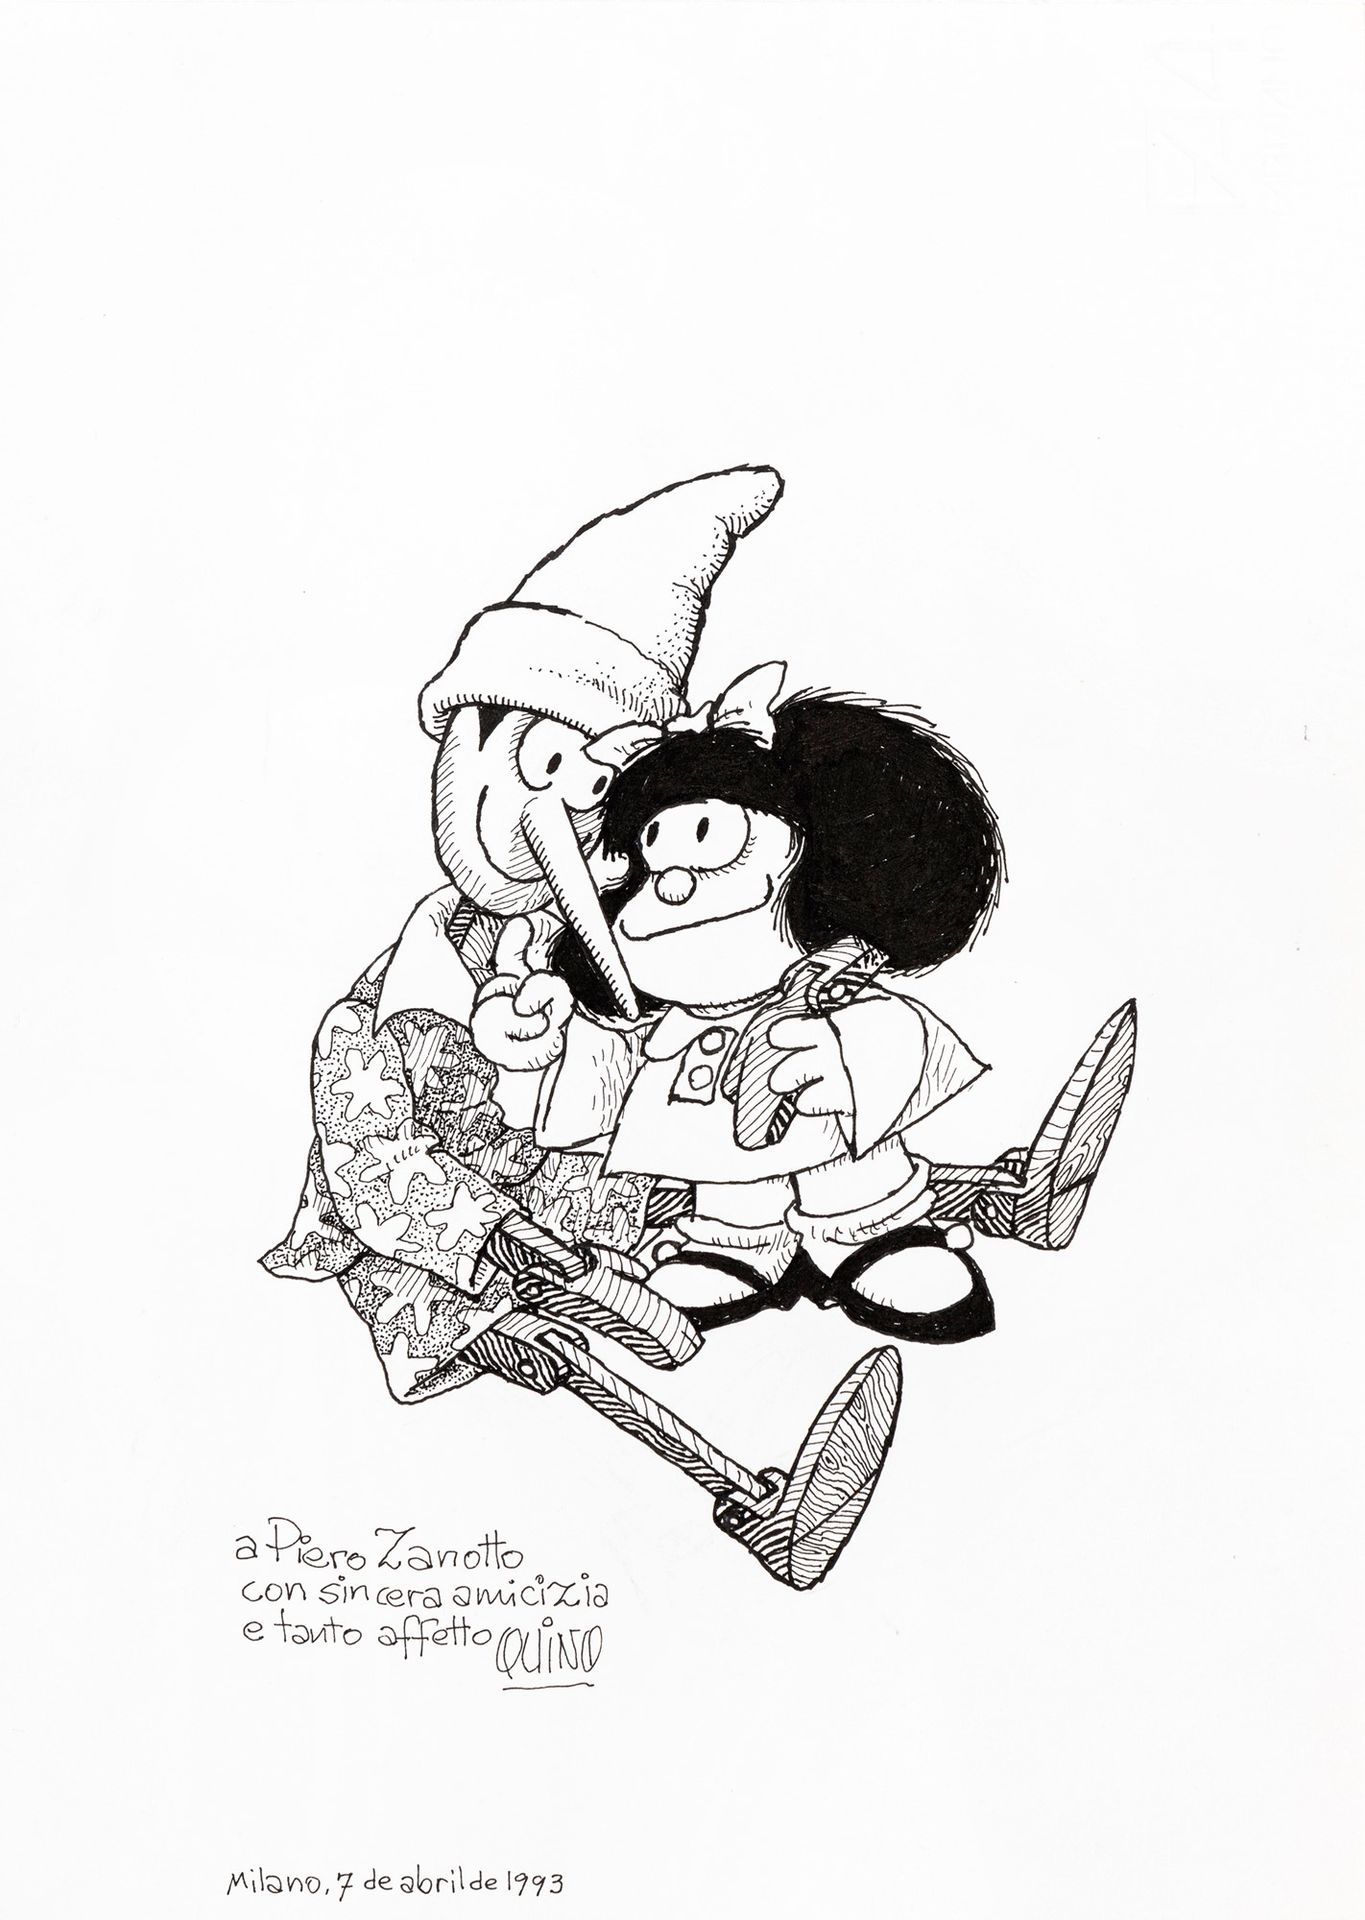 Quino (Joaquín Lavado) Pinocchio e Mafalda, 1993

lápiz y tinta sobre cartón fin&hellip;